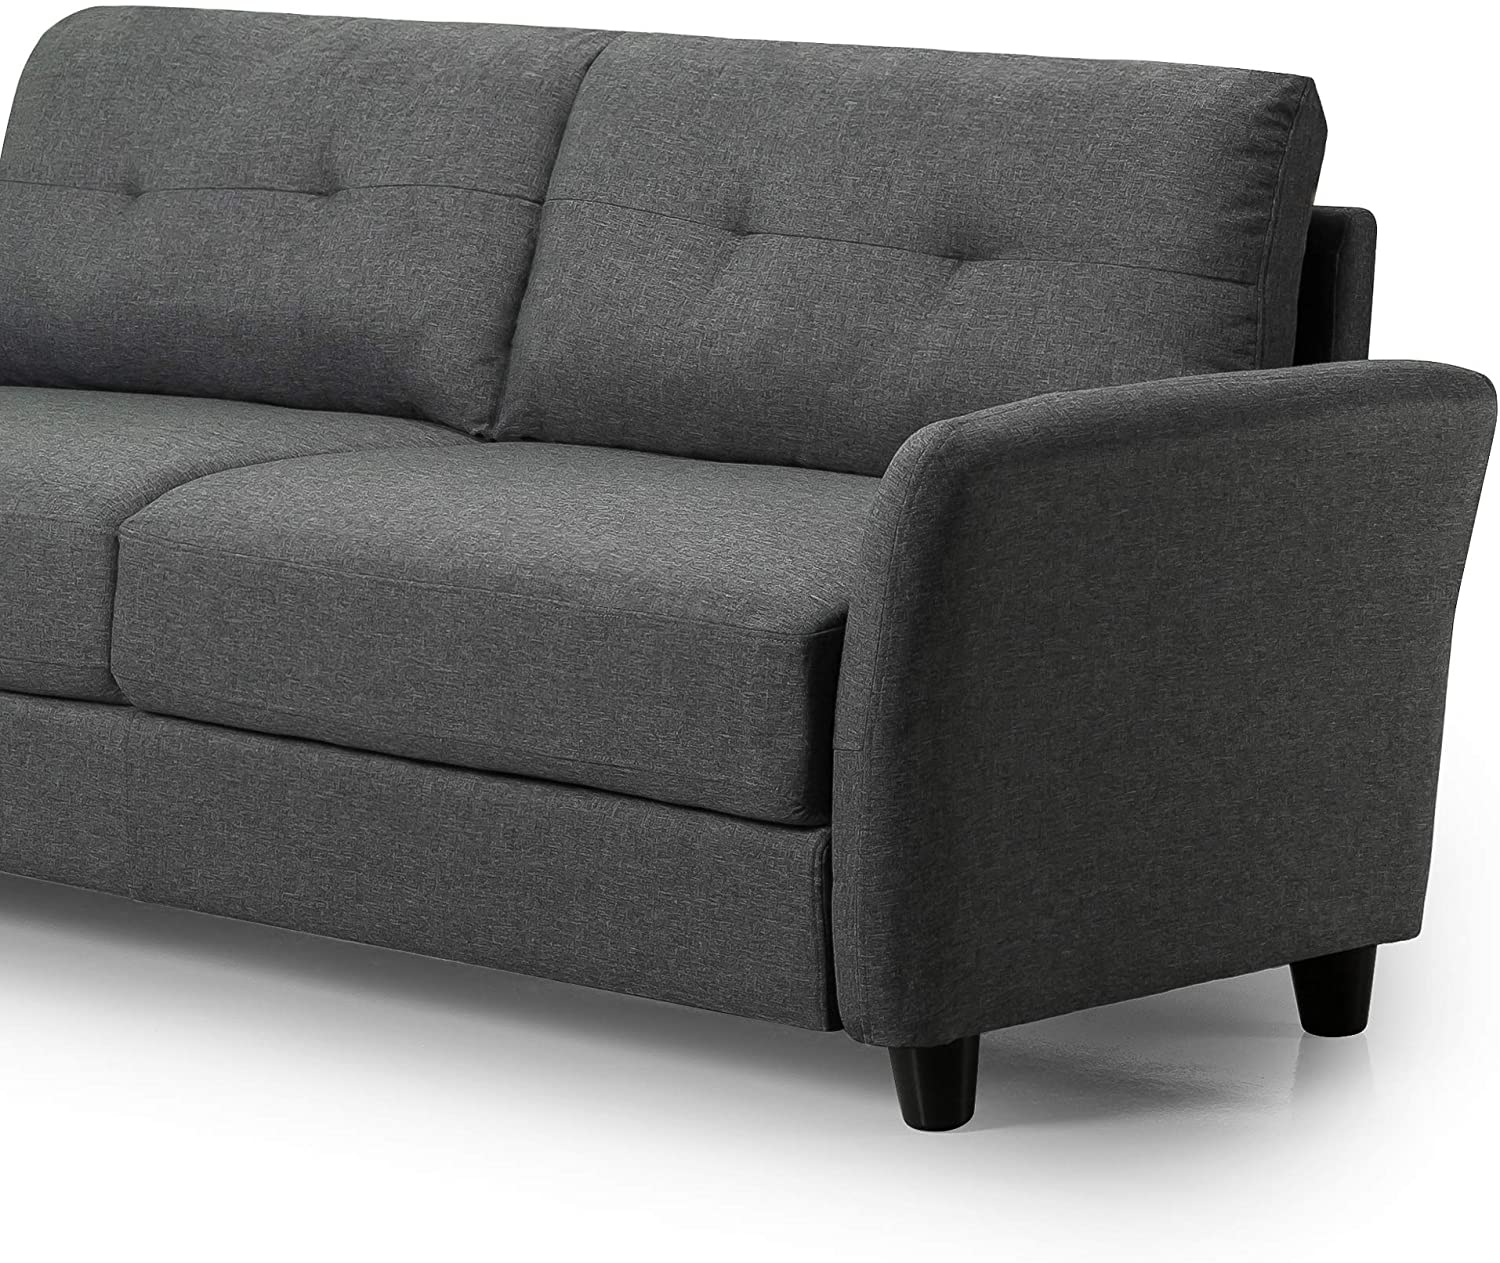 Zinus Ricardo Sofa Couch